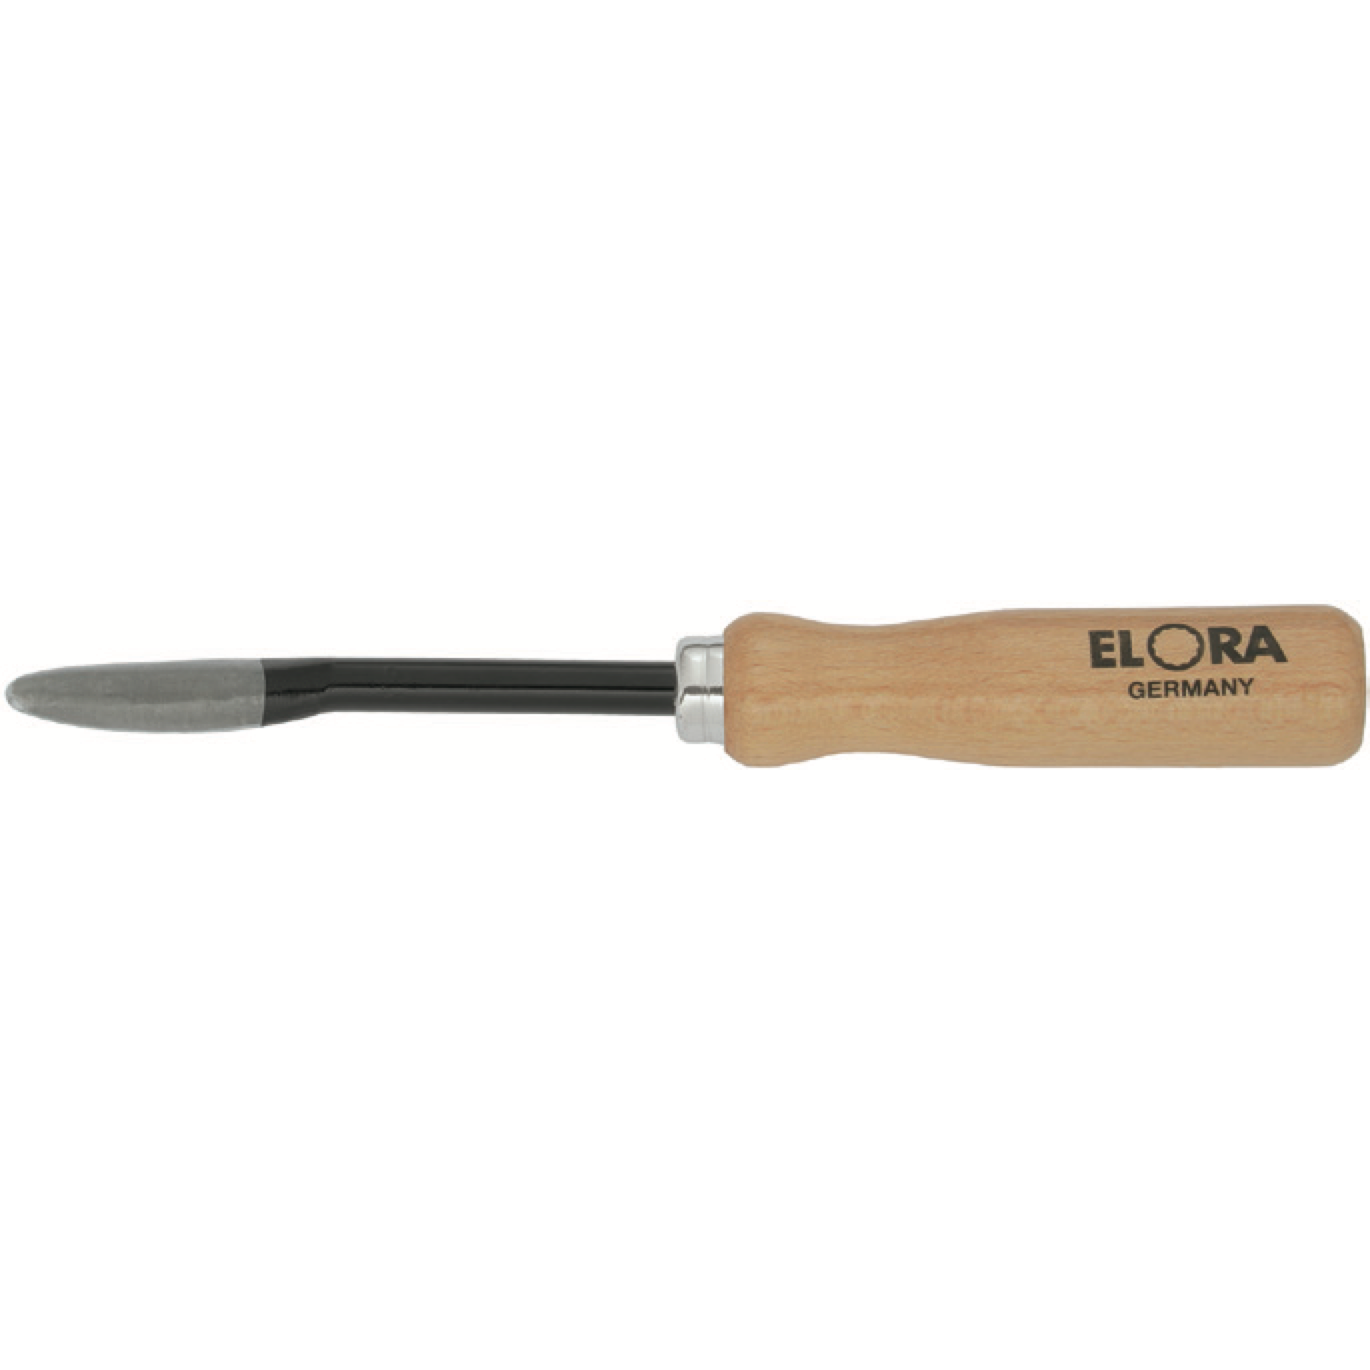 ELORA 273 Bearing Scraper Or Hollow Ground Scraper (ELORA Tools) - Premium Scraper from ELORA - Shop now at Yew Aik.